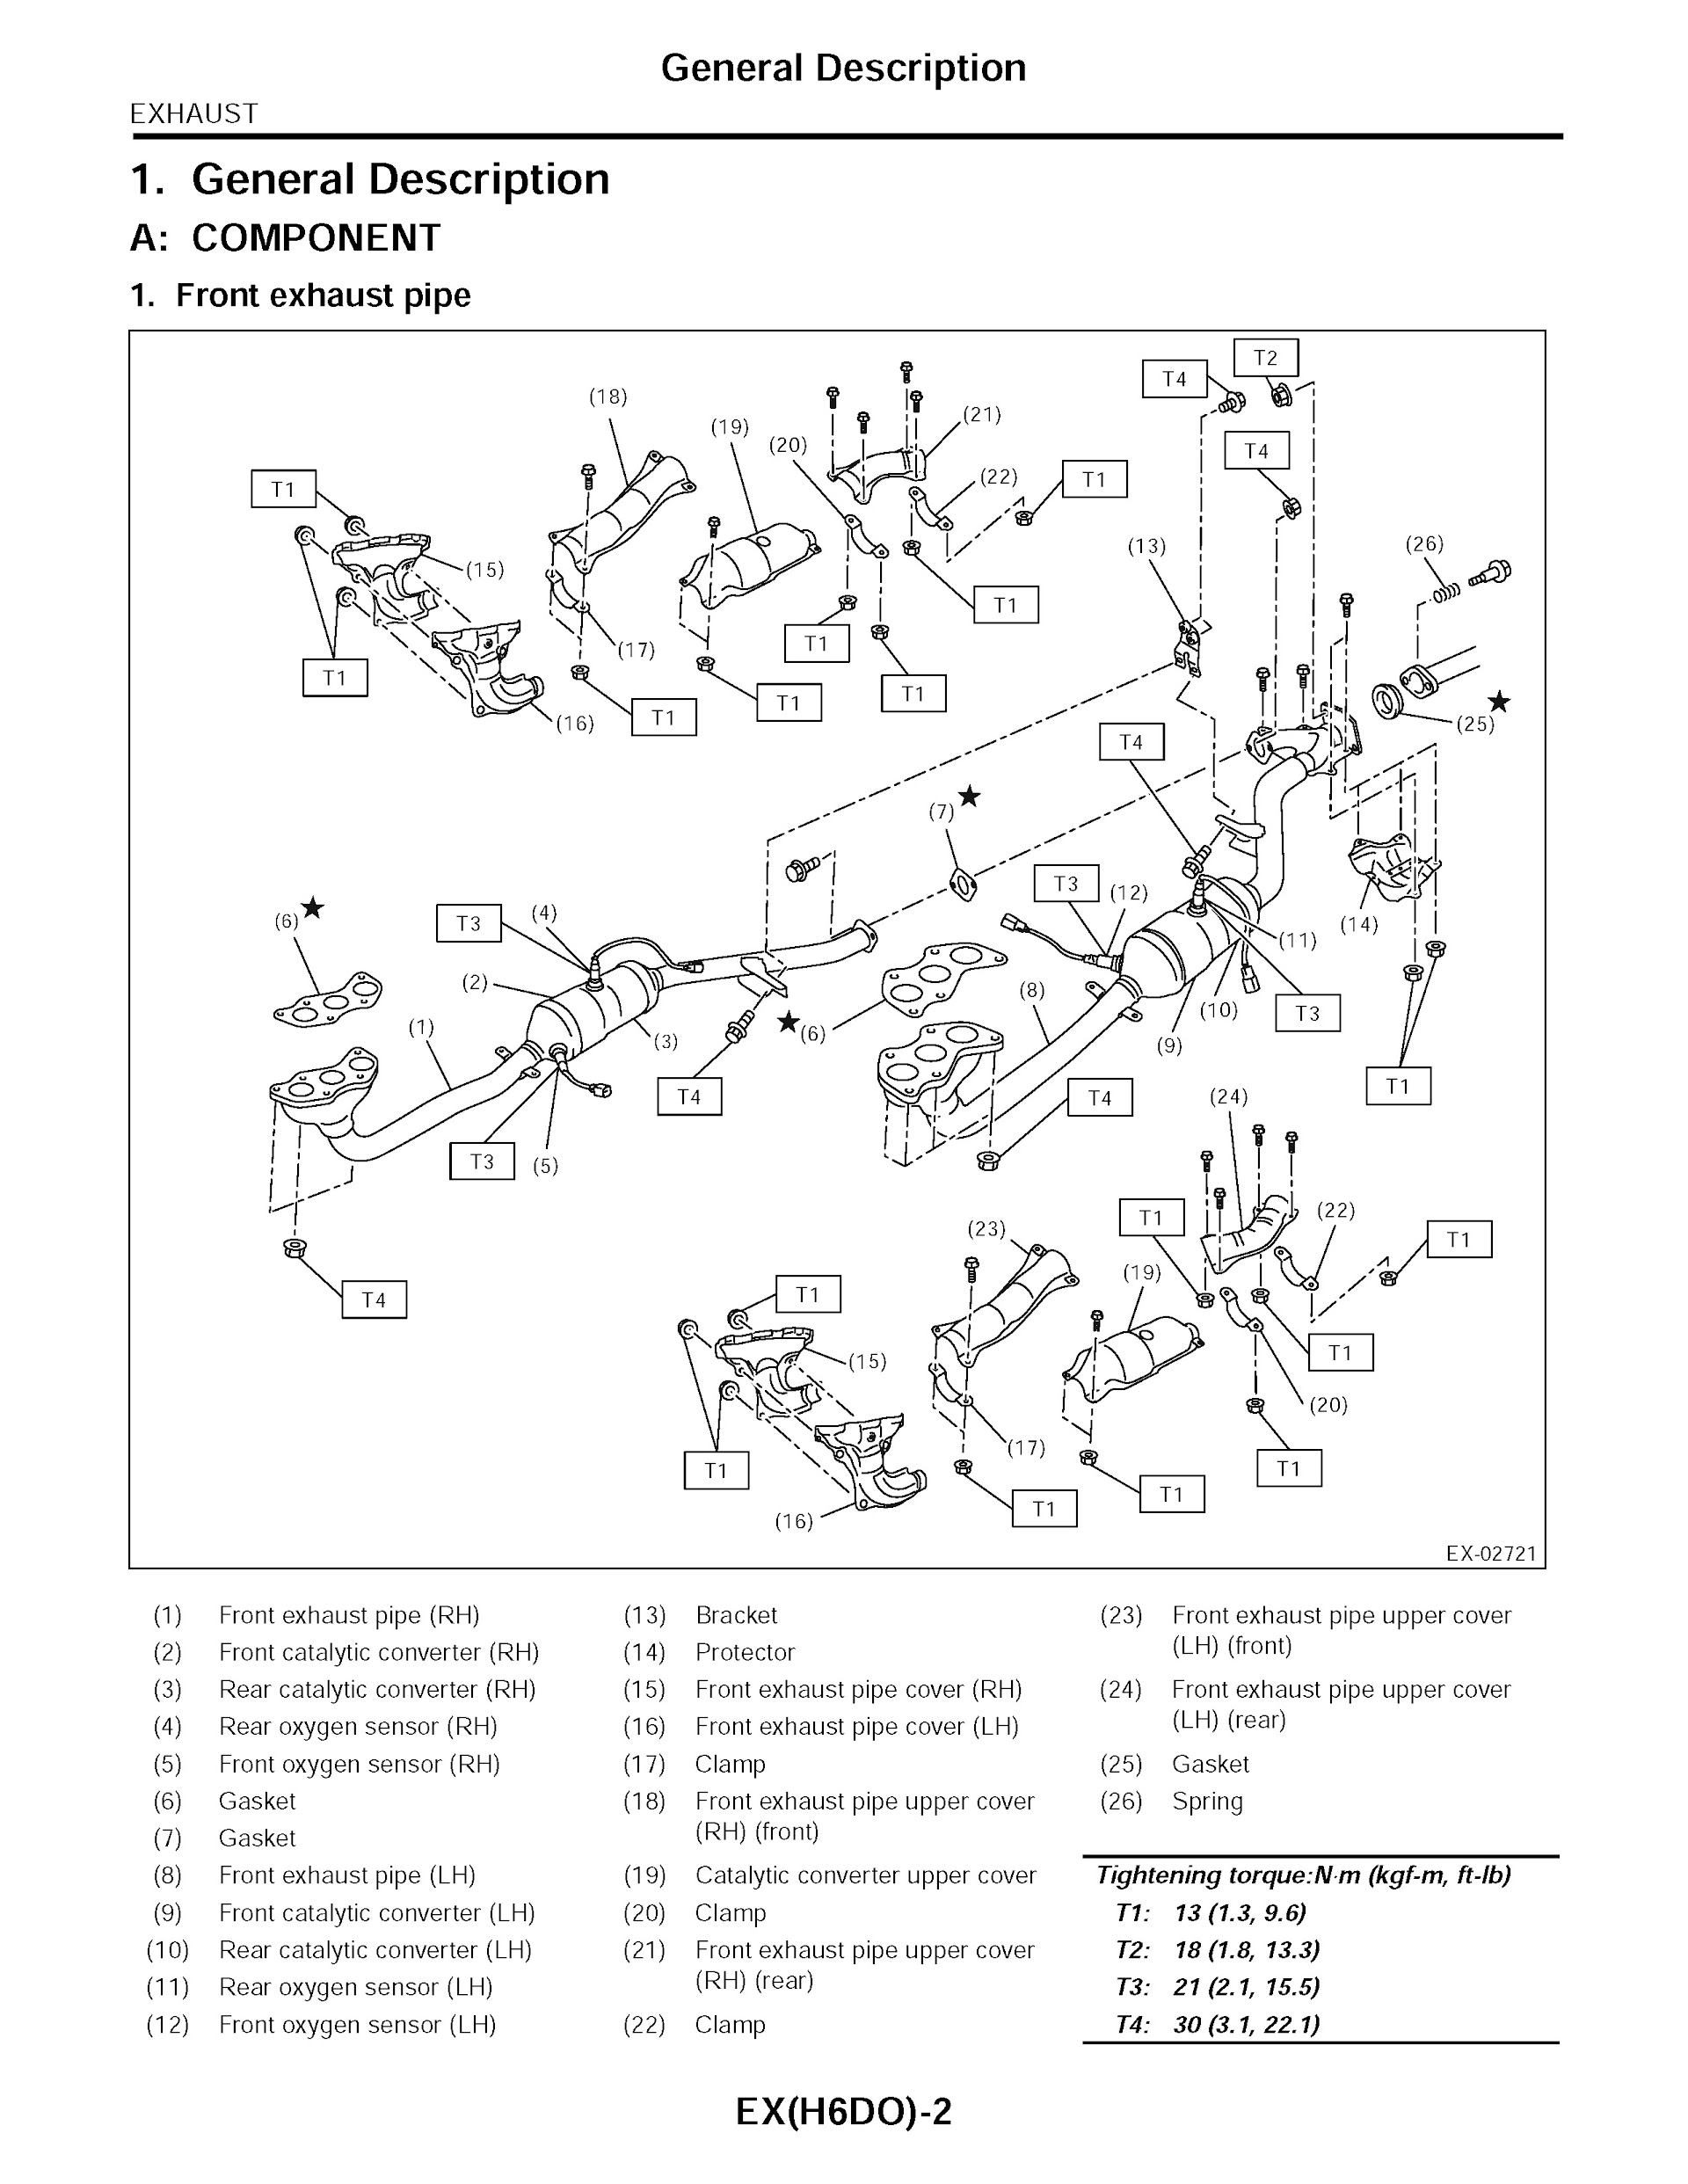 2014 Subaru Tribeca Repair Manual, General Description